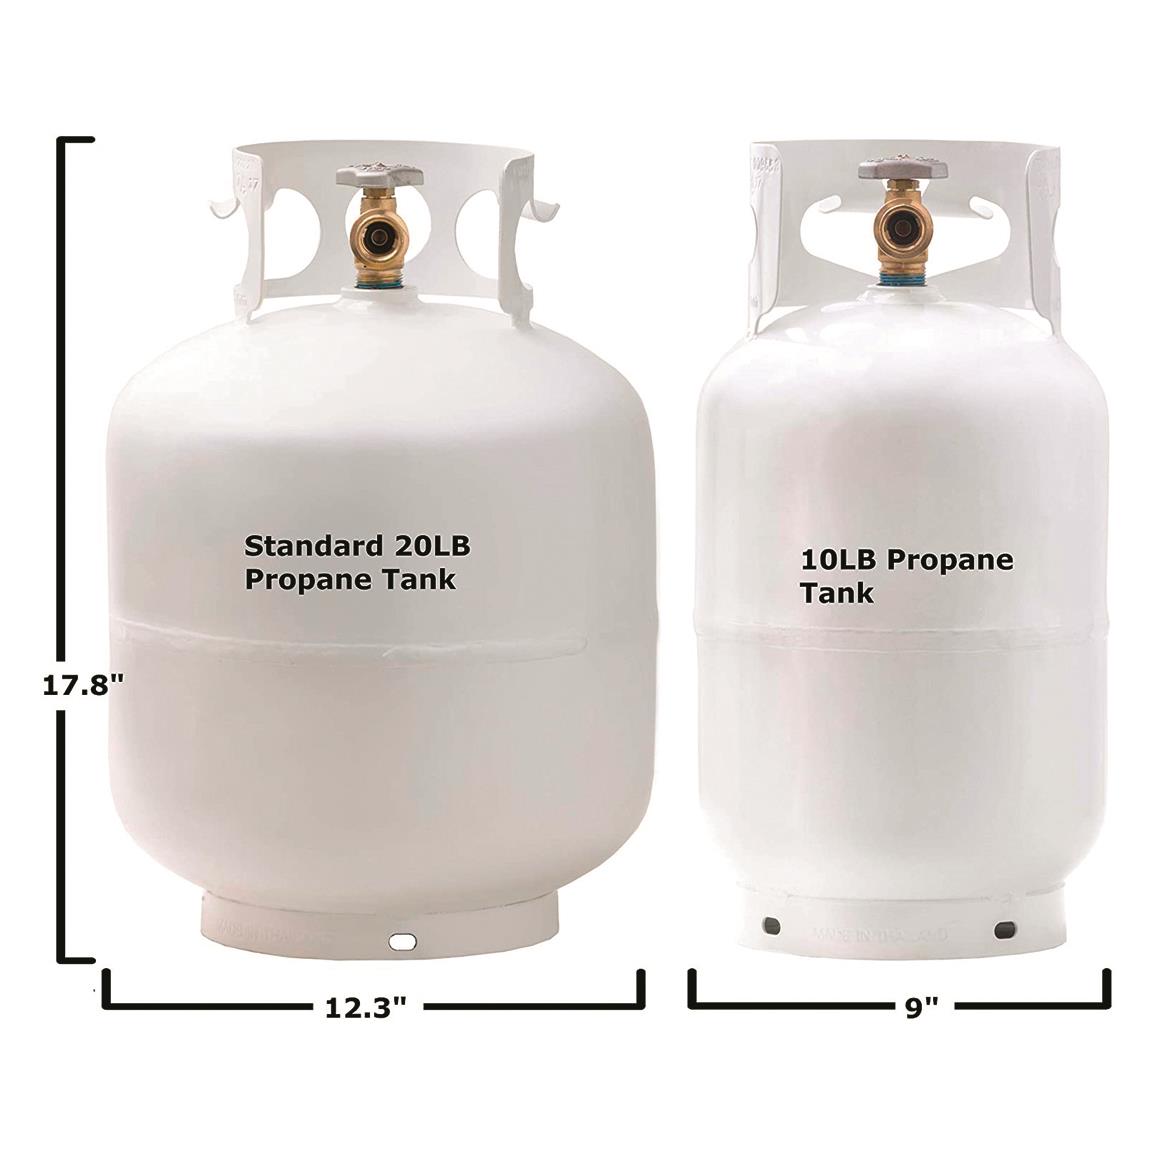 Flame King Propane Tank Gauge Level Indicator Leak Detector Pressure Meter,  Glows in The Dark, for Cylinders (YSN212B)